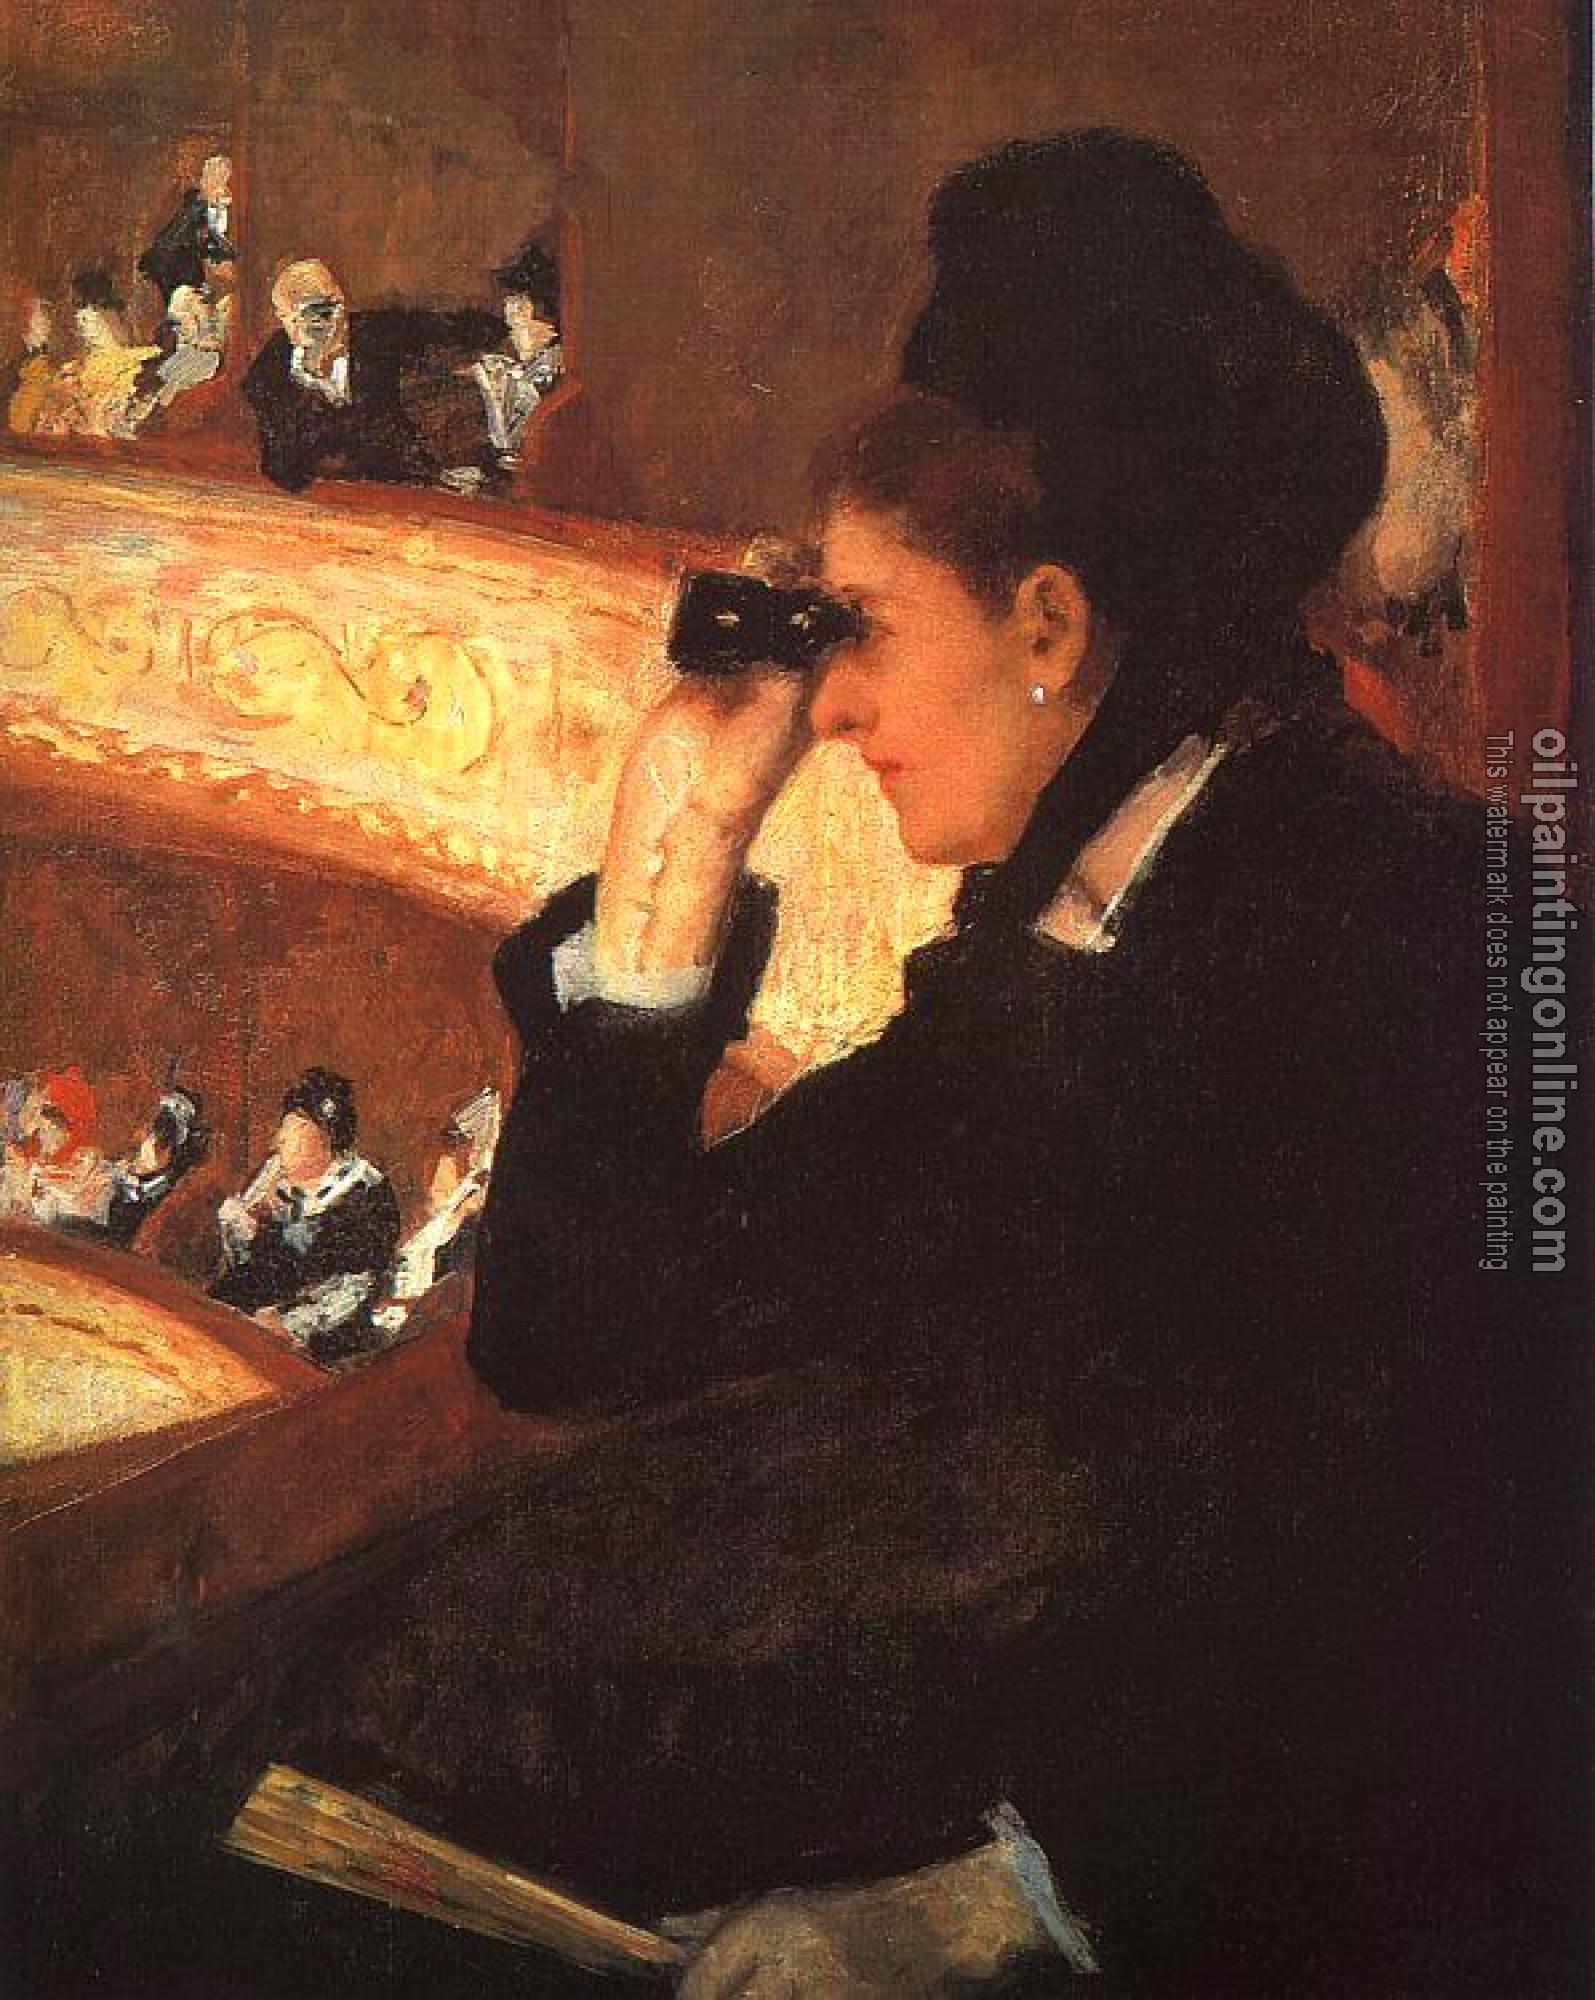 Cassatt, Mary - At the Opera